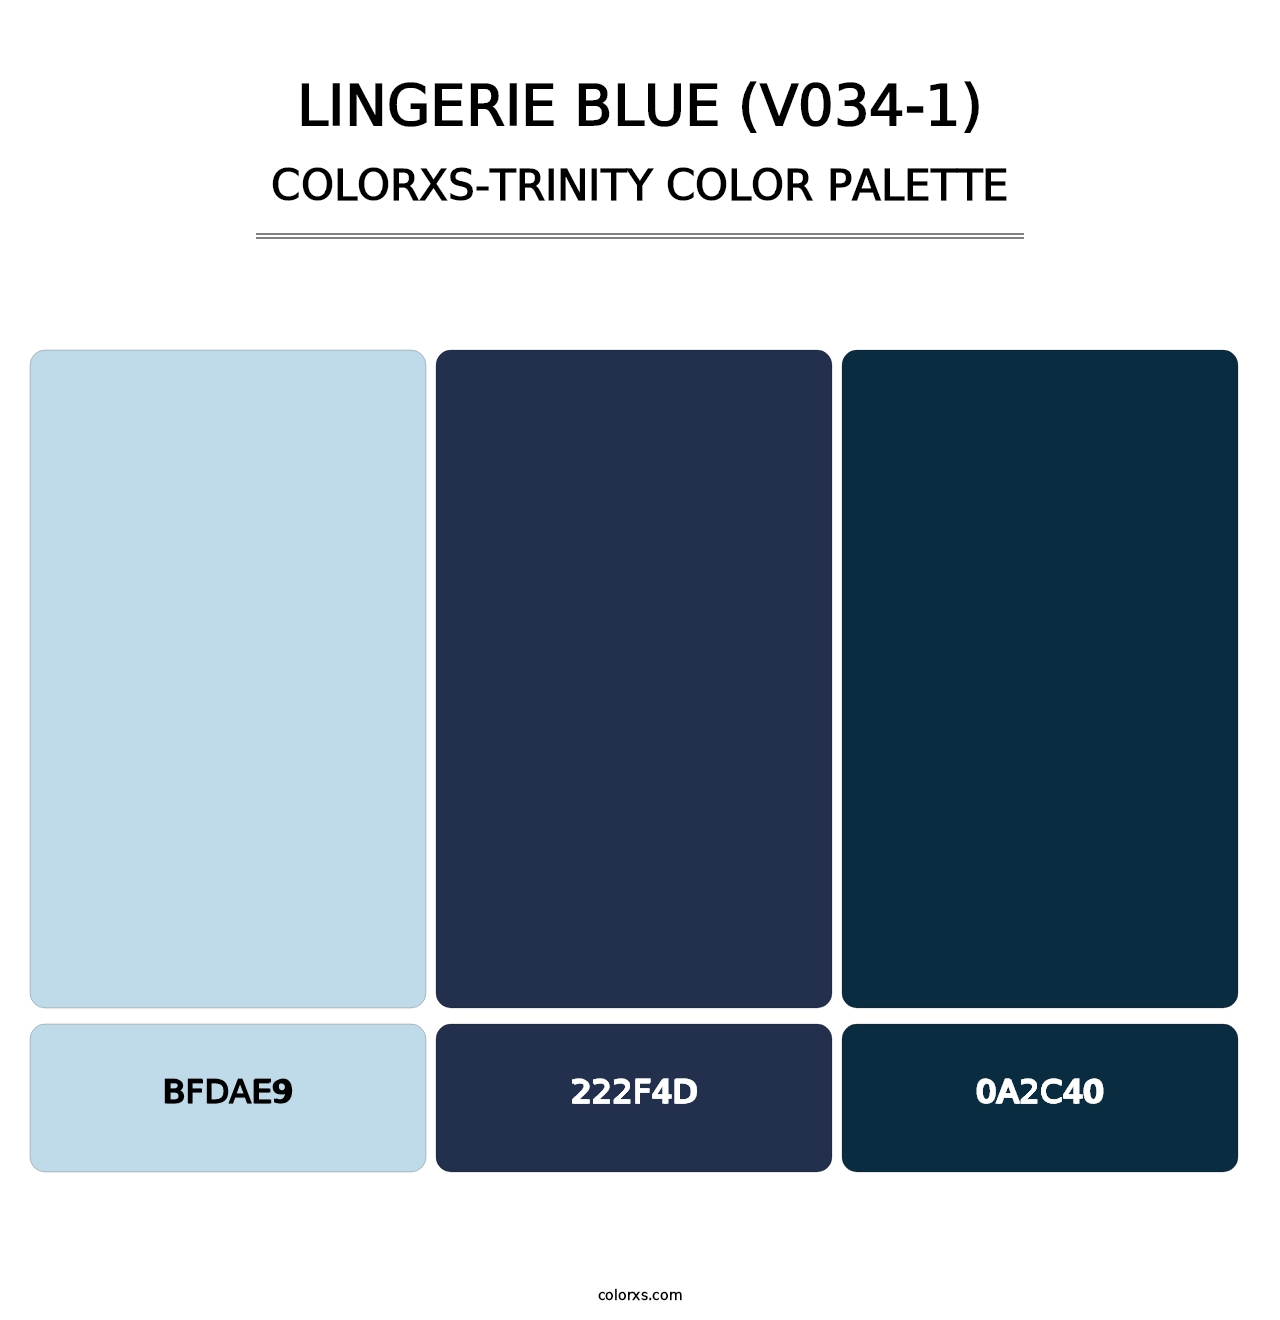 Lingerie Blue (V034-1) - Colorxs Trinity Palette